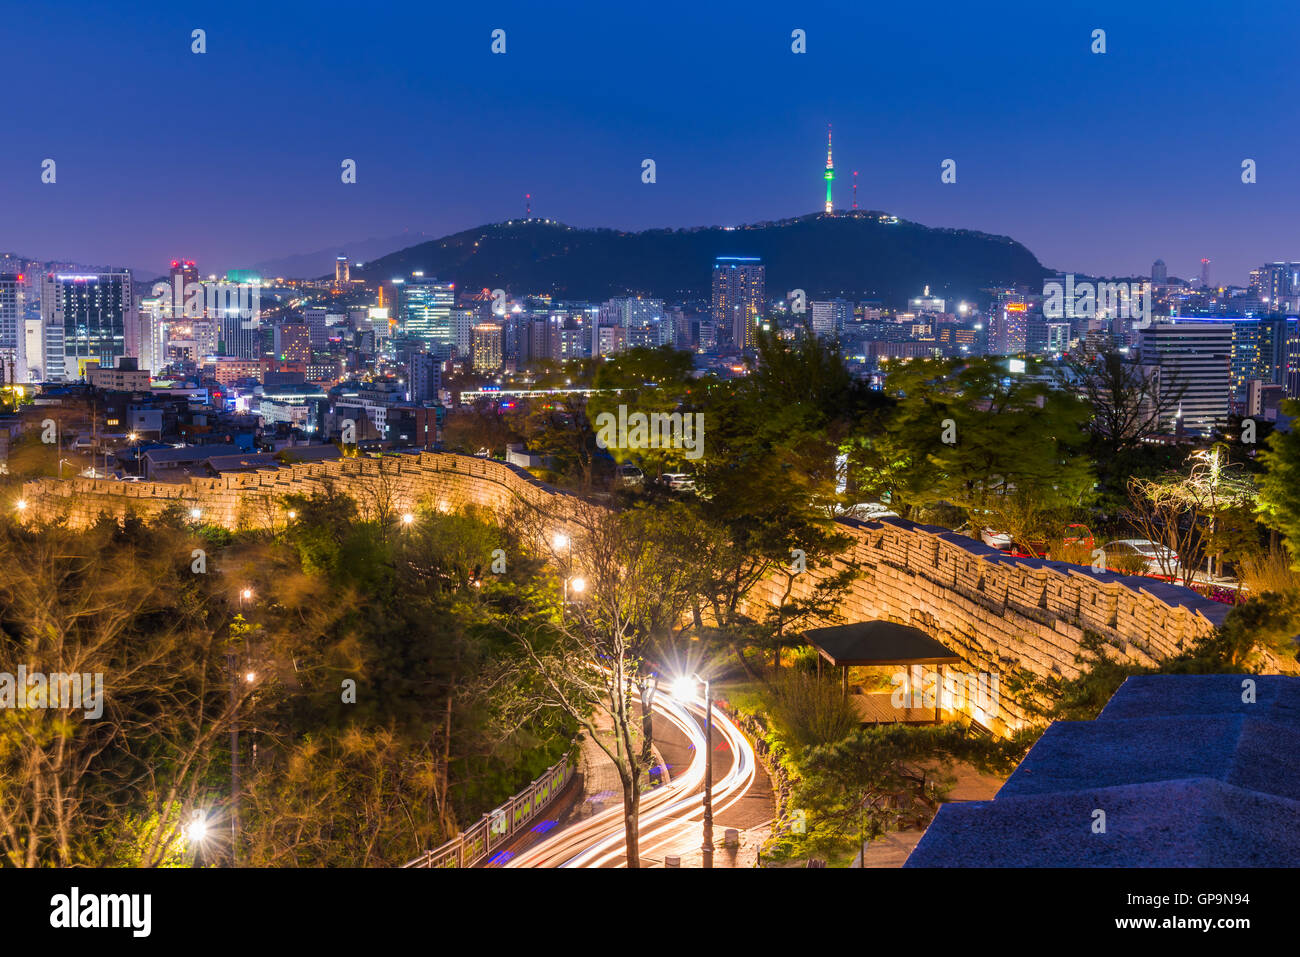 Seoul at night, South Korea city skyline. Stock Photo